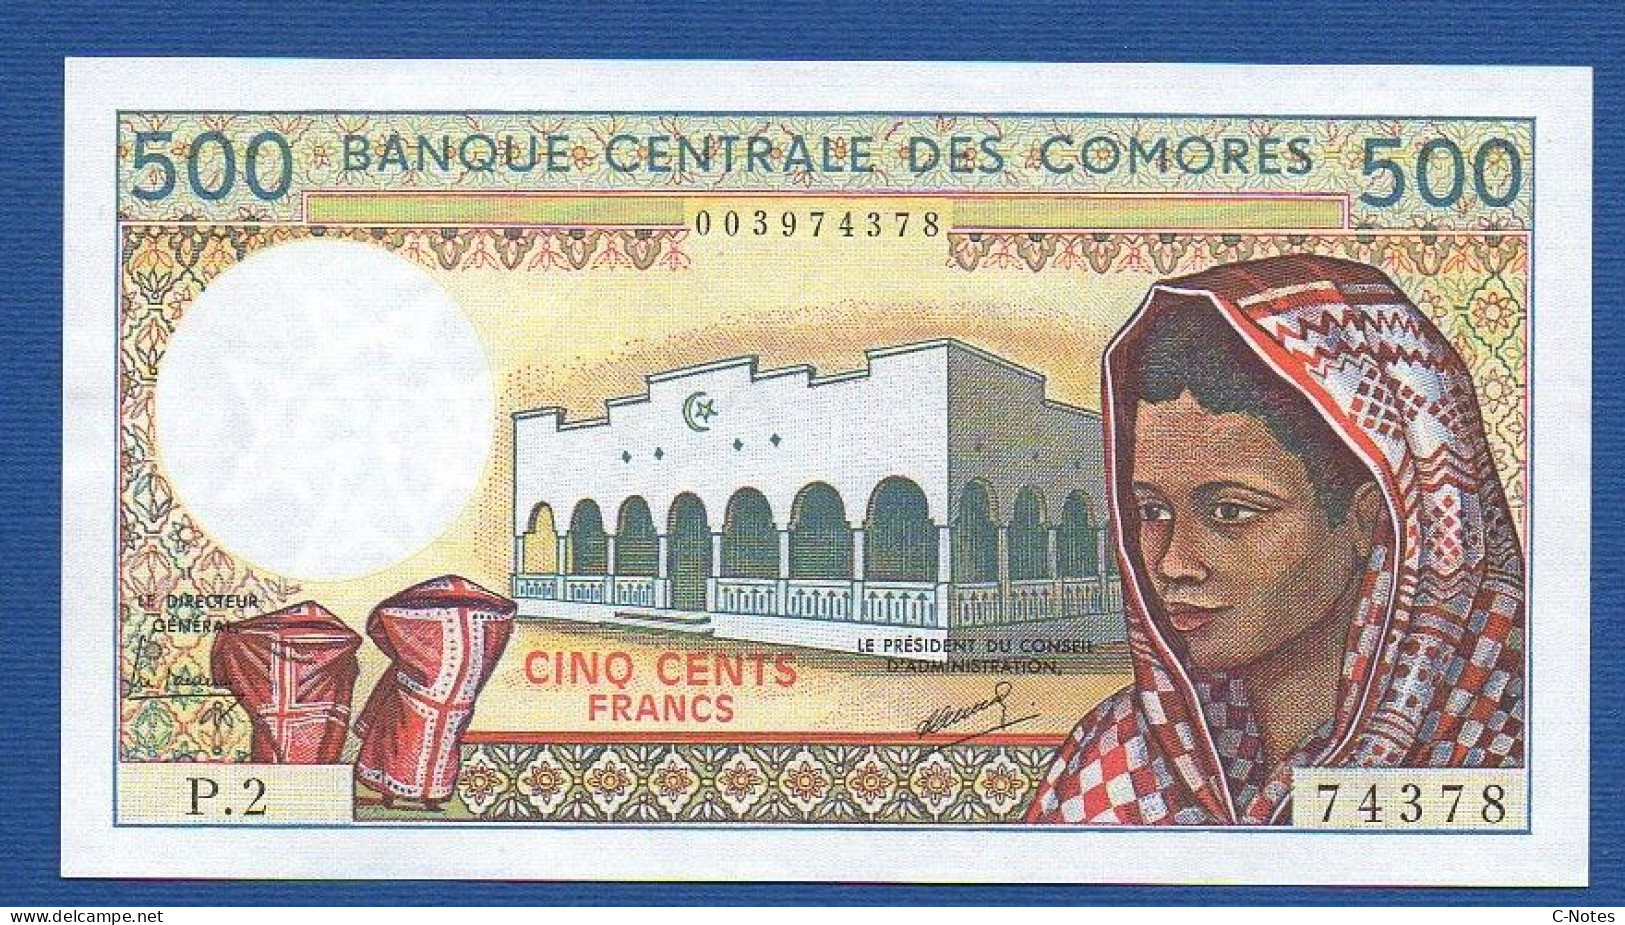 COMOROS - P.10a2 – 500 Francs ND (1984 - 2004) UNC, S/n P.2 74378 - Komoren